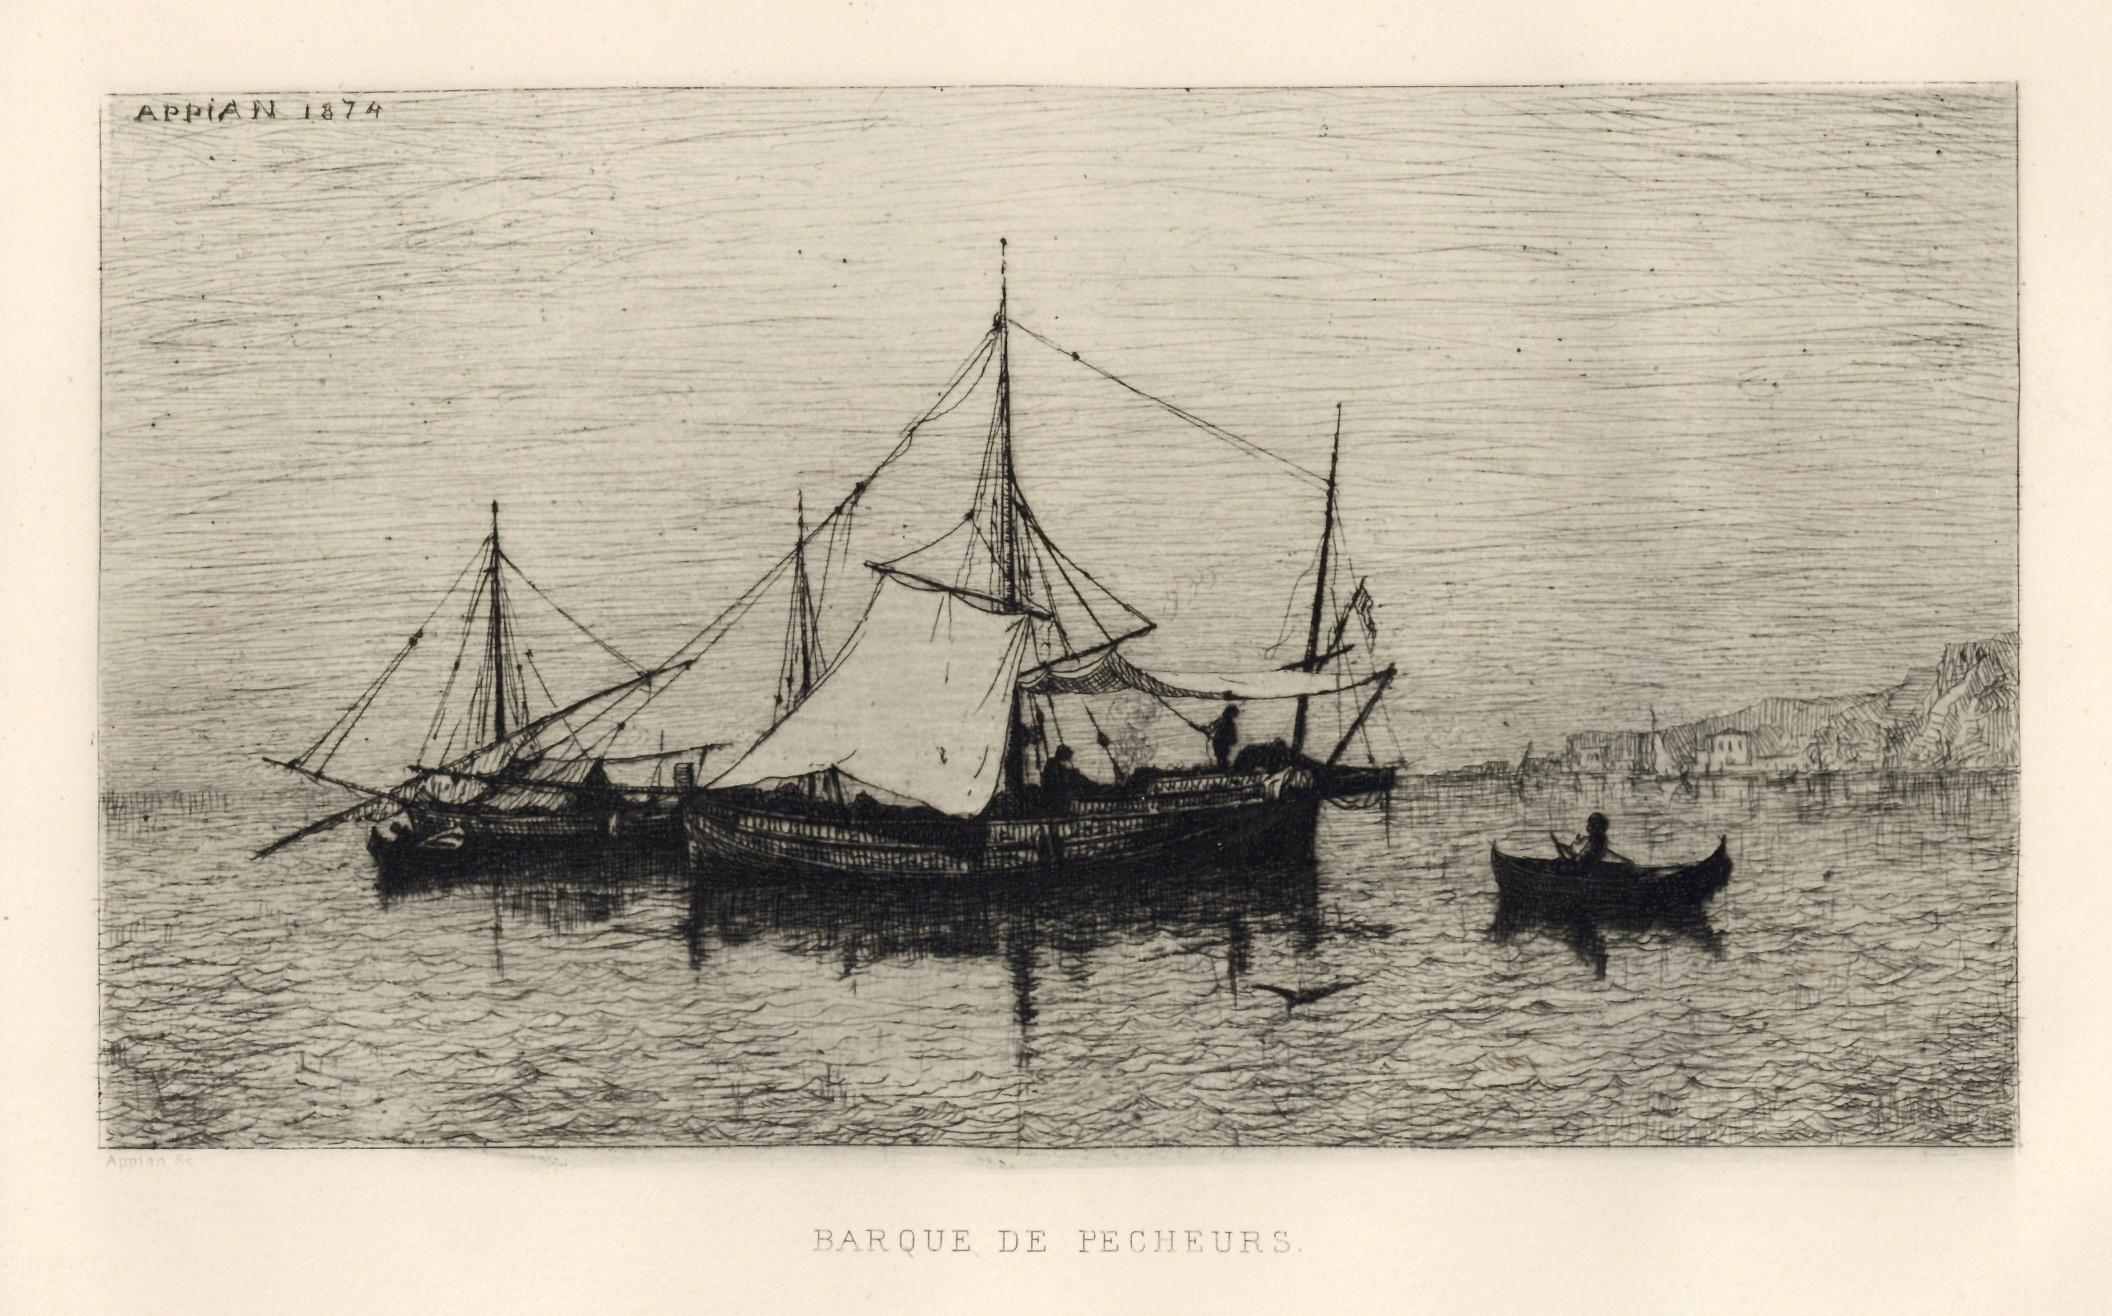 "Barque de pecheurs" original etching - Print by Adolphe APPIAN